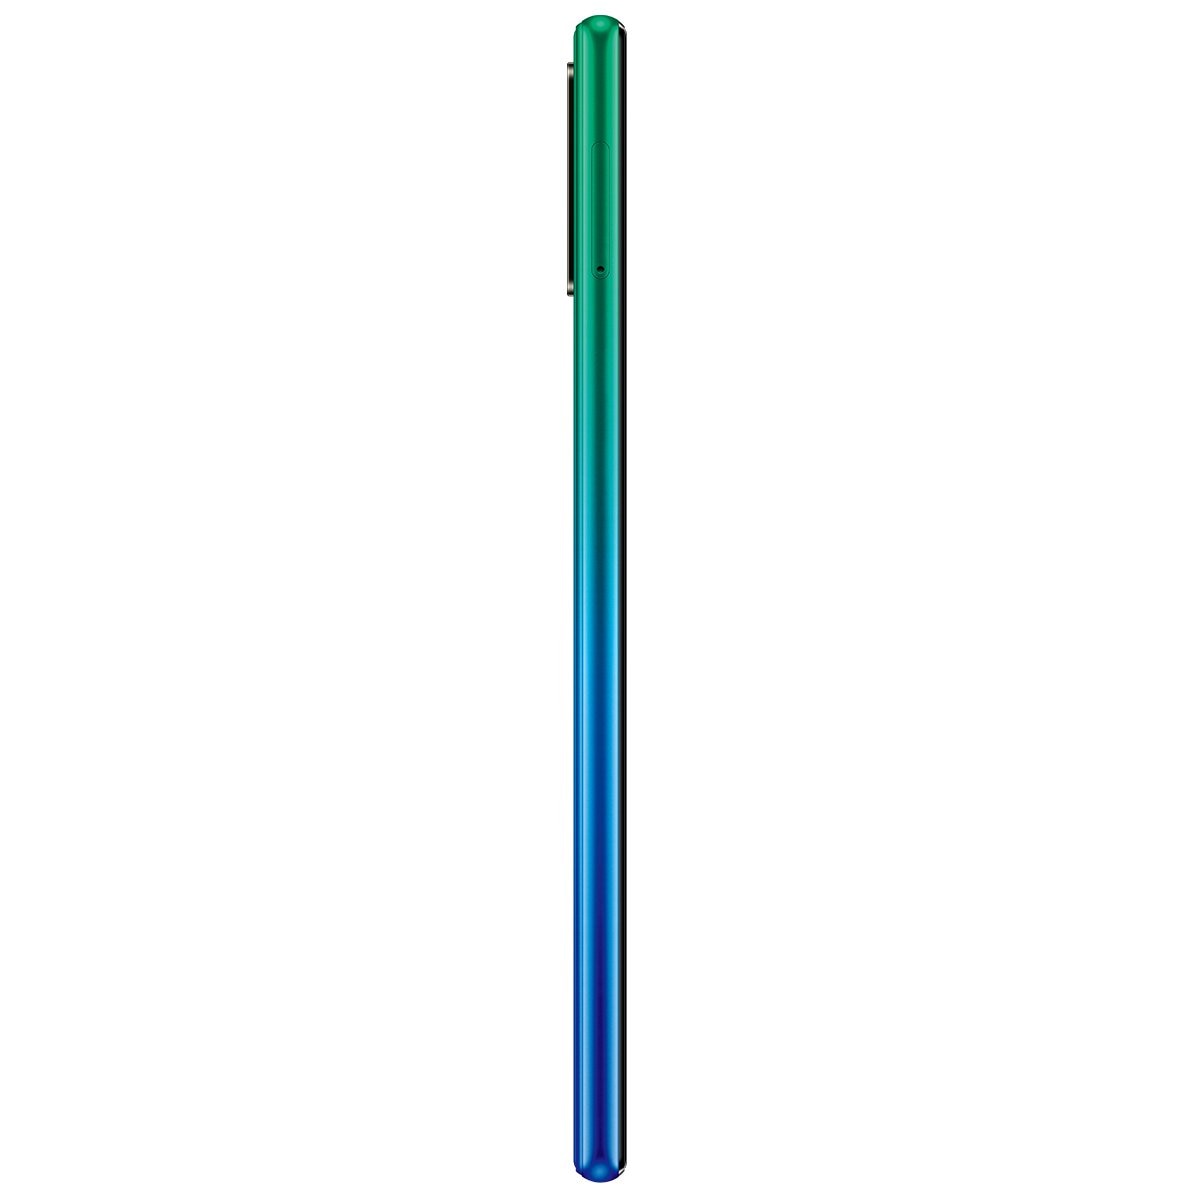 Celular Huawei Y7P Color Azul Open